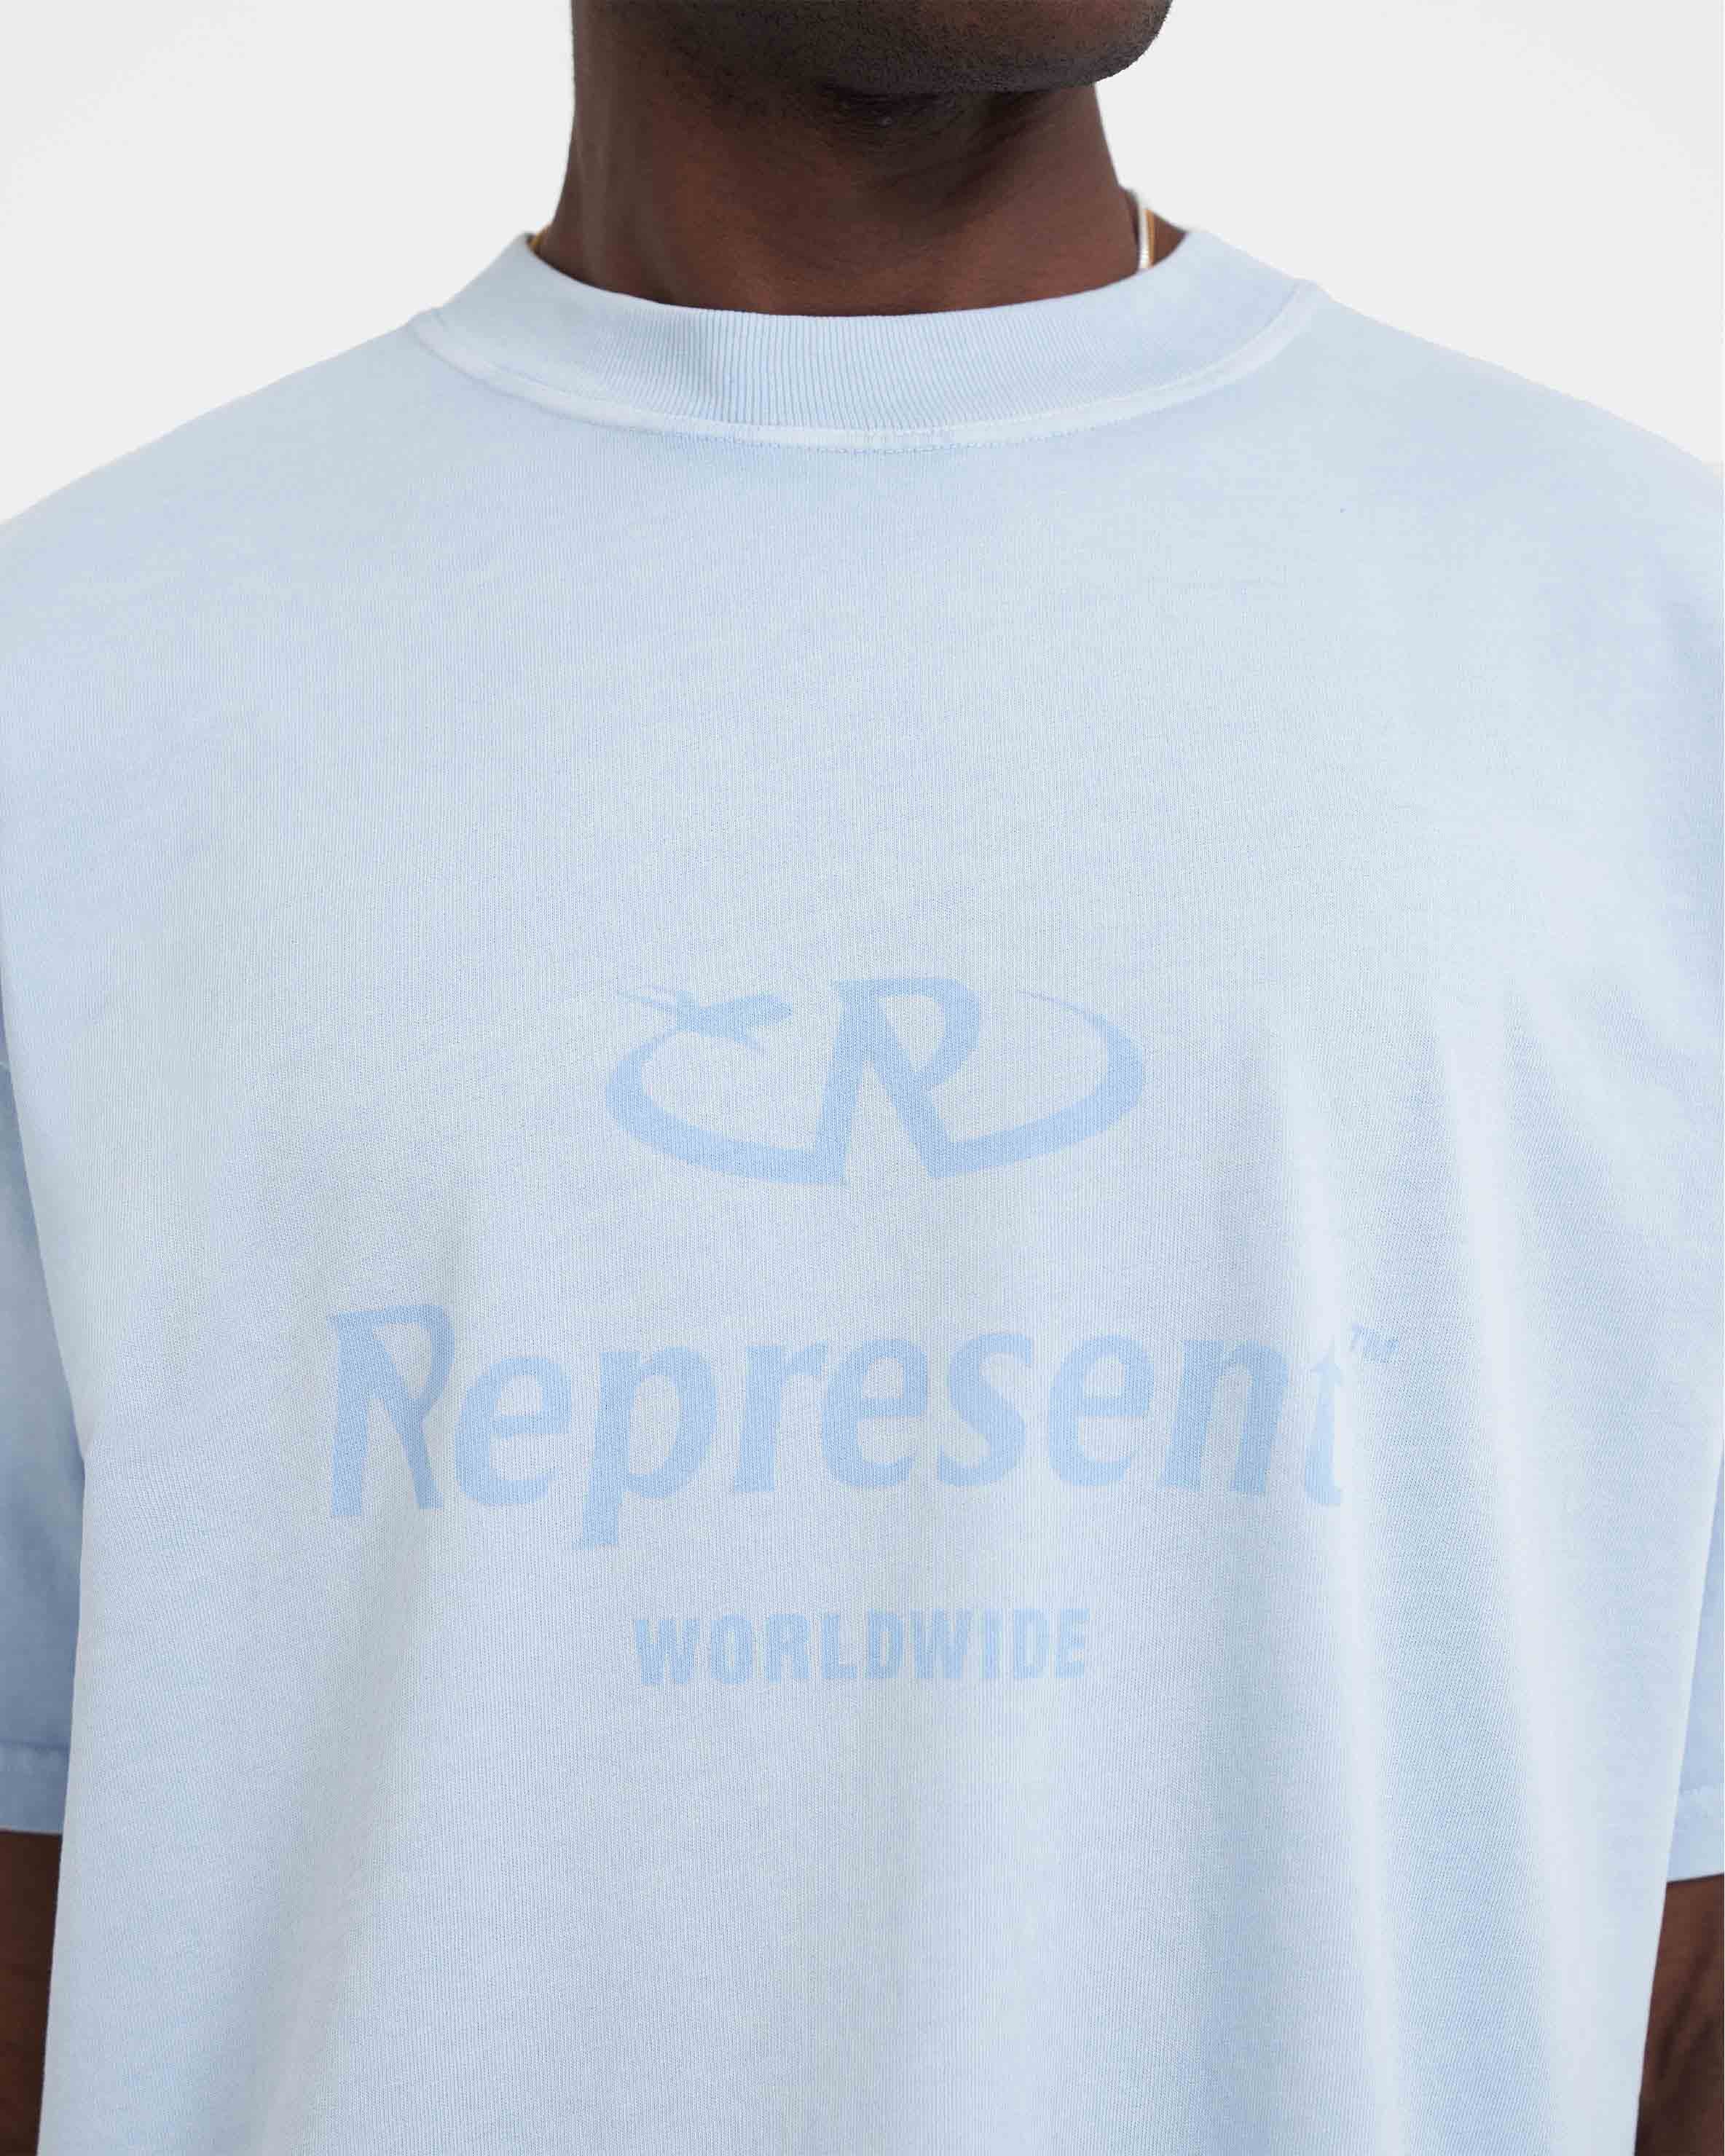 Worldwide T-Shirt - Powder Blue